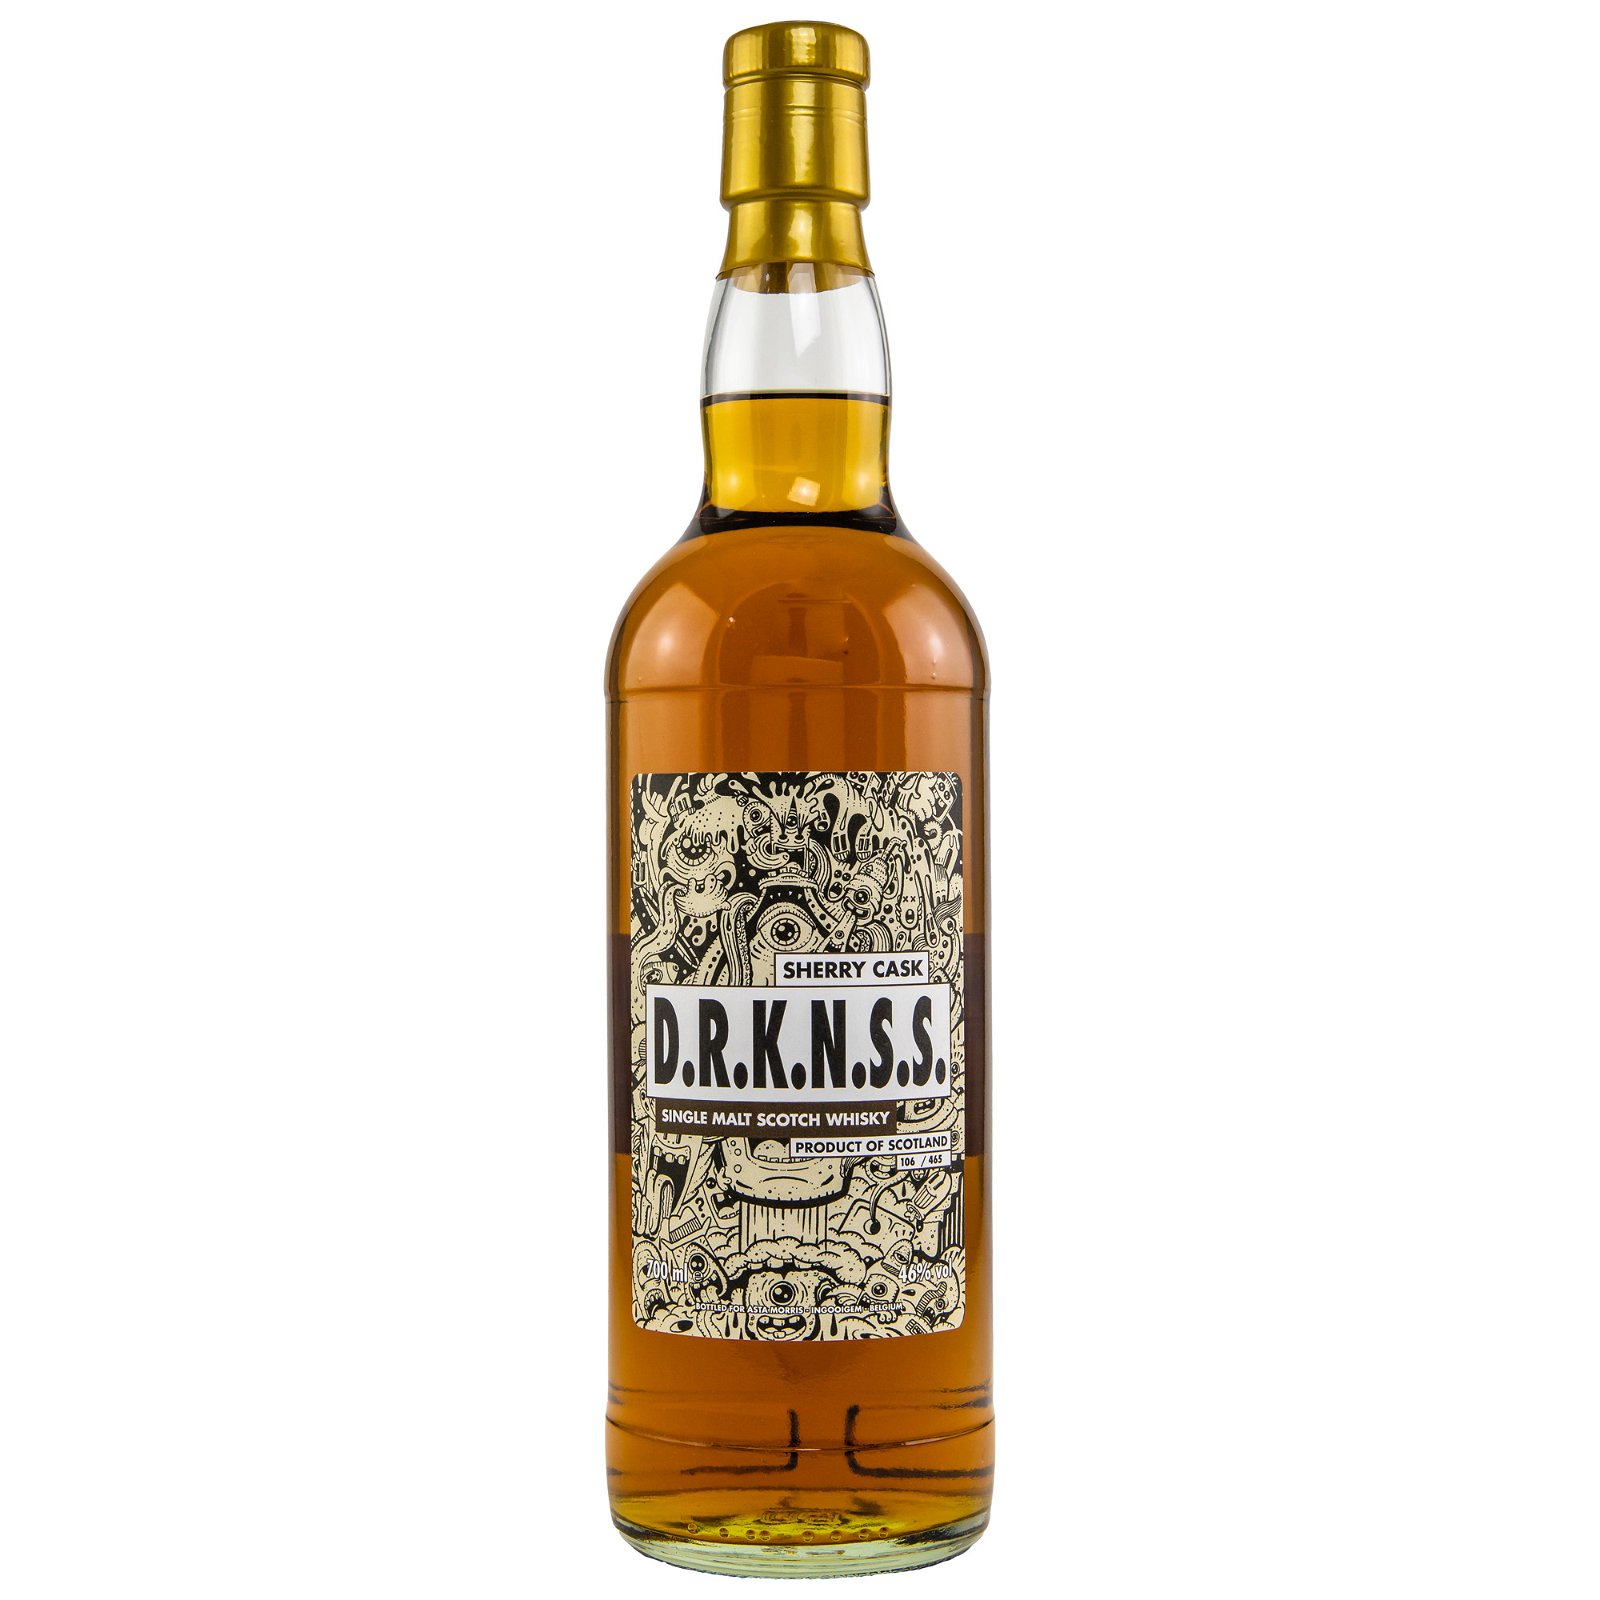 D.R.K.N.S.S. Sherry Cask Single Malt Scotch Whisky (Asta Morris)